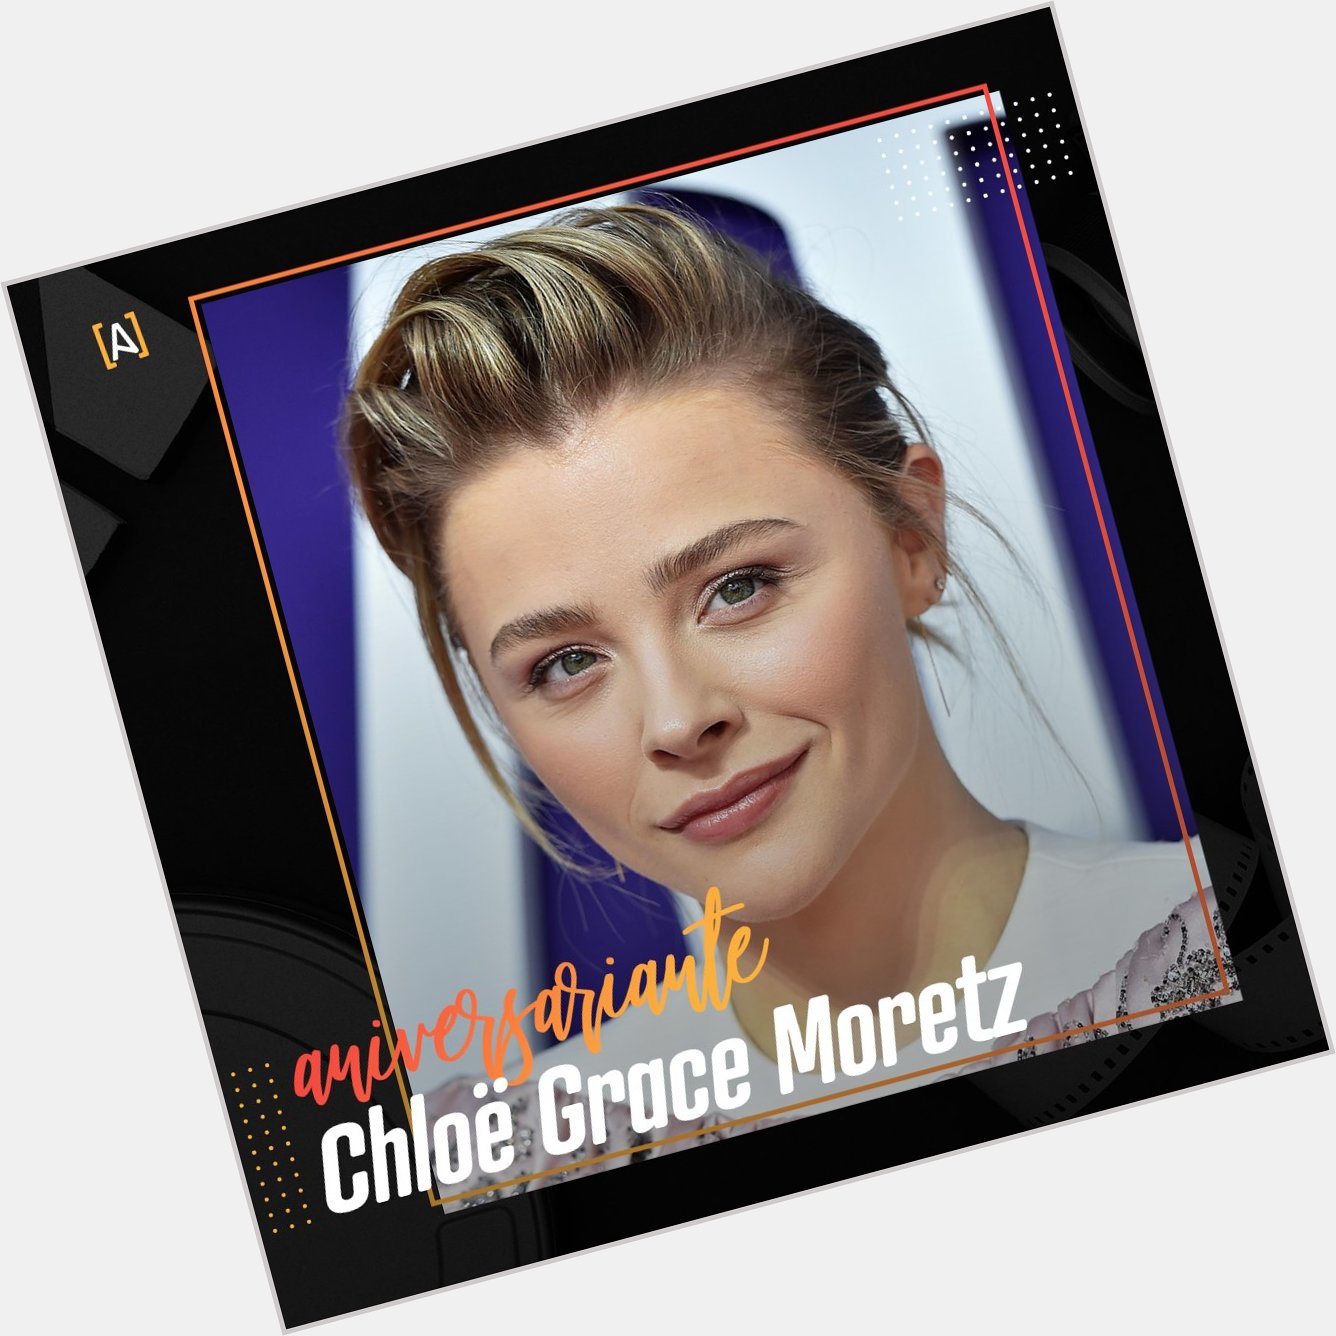 Chloë Grace Moretz fez aniversário hoje! Ela completa 24 anos. Happy birthday Chloë! 